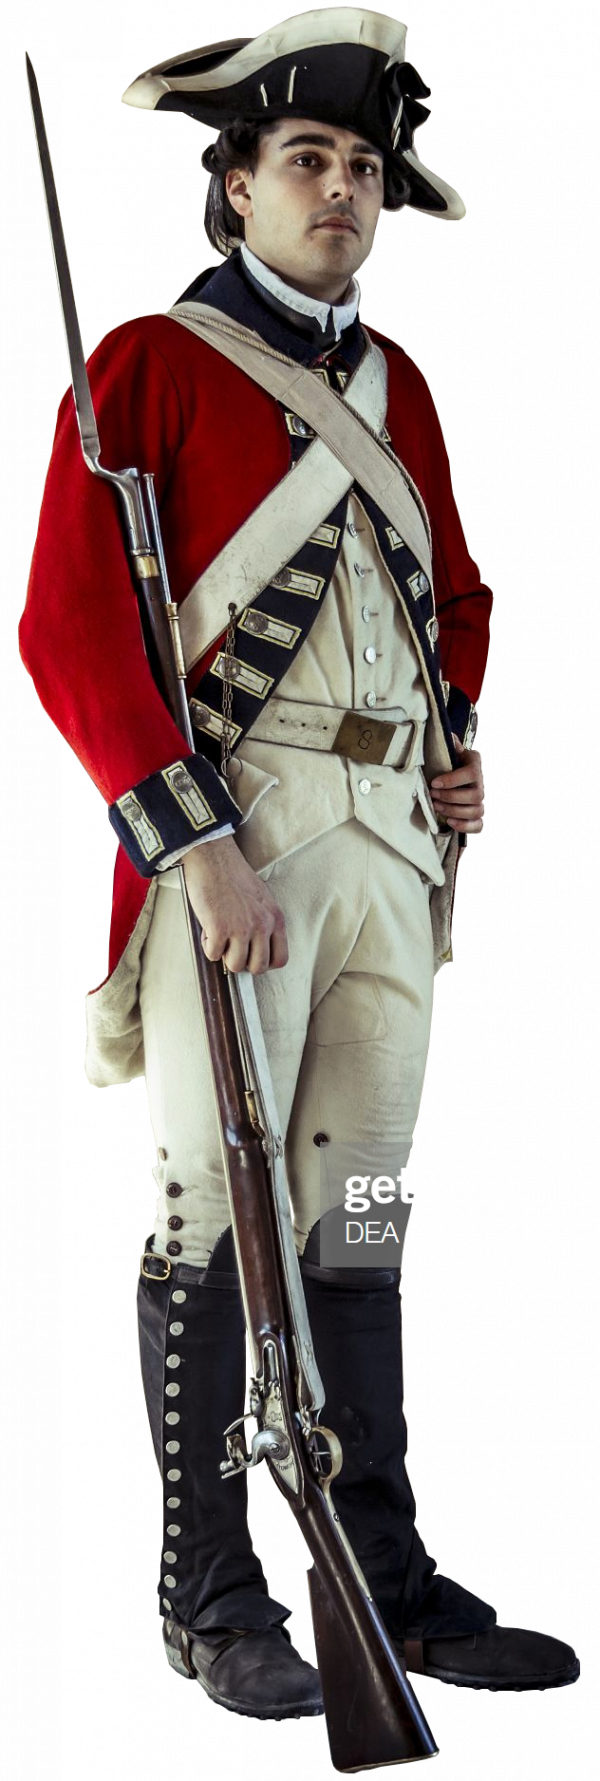 British Redcoat Infantry - A Historical Artwork